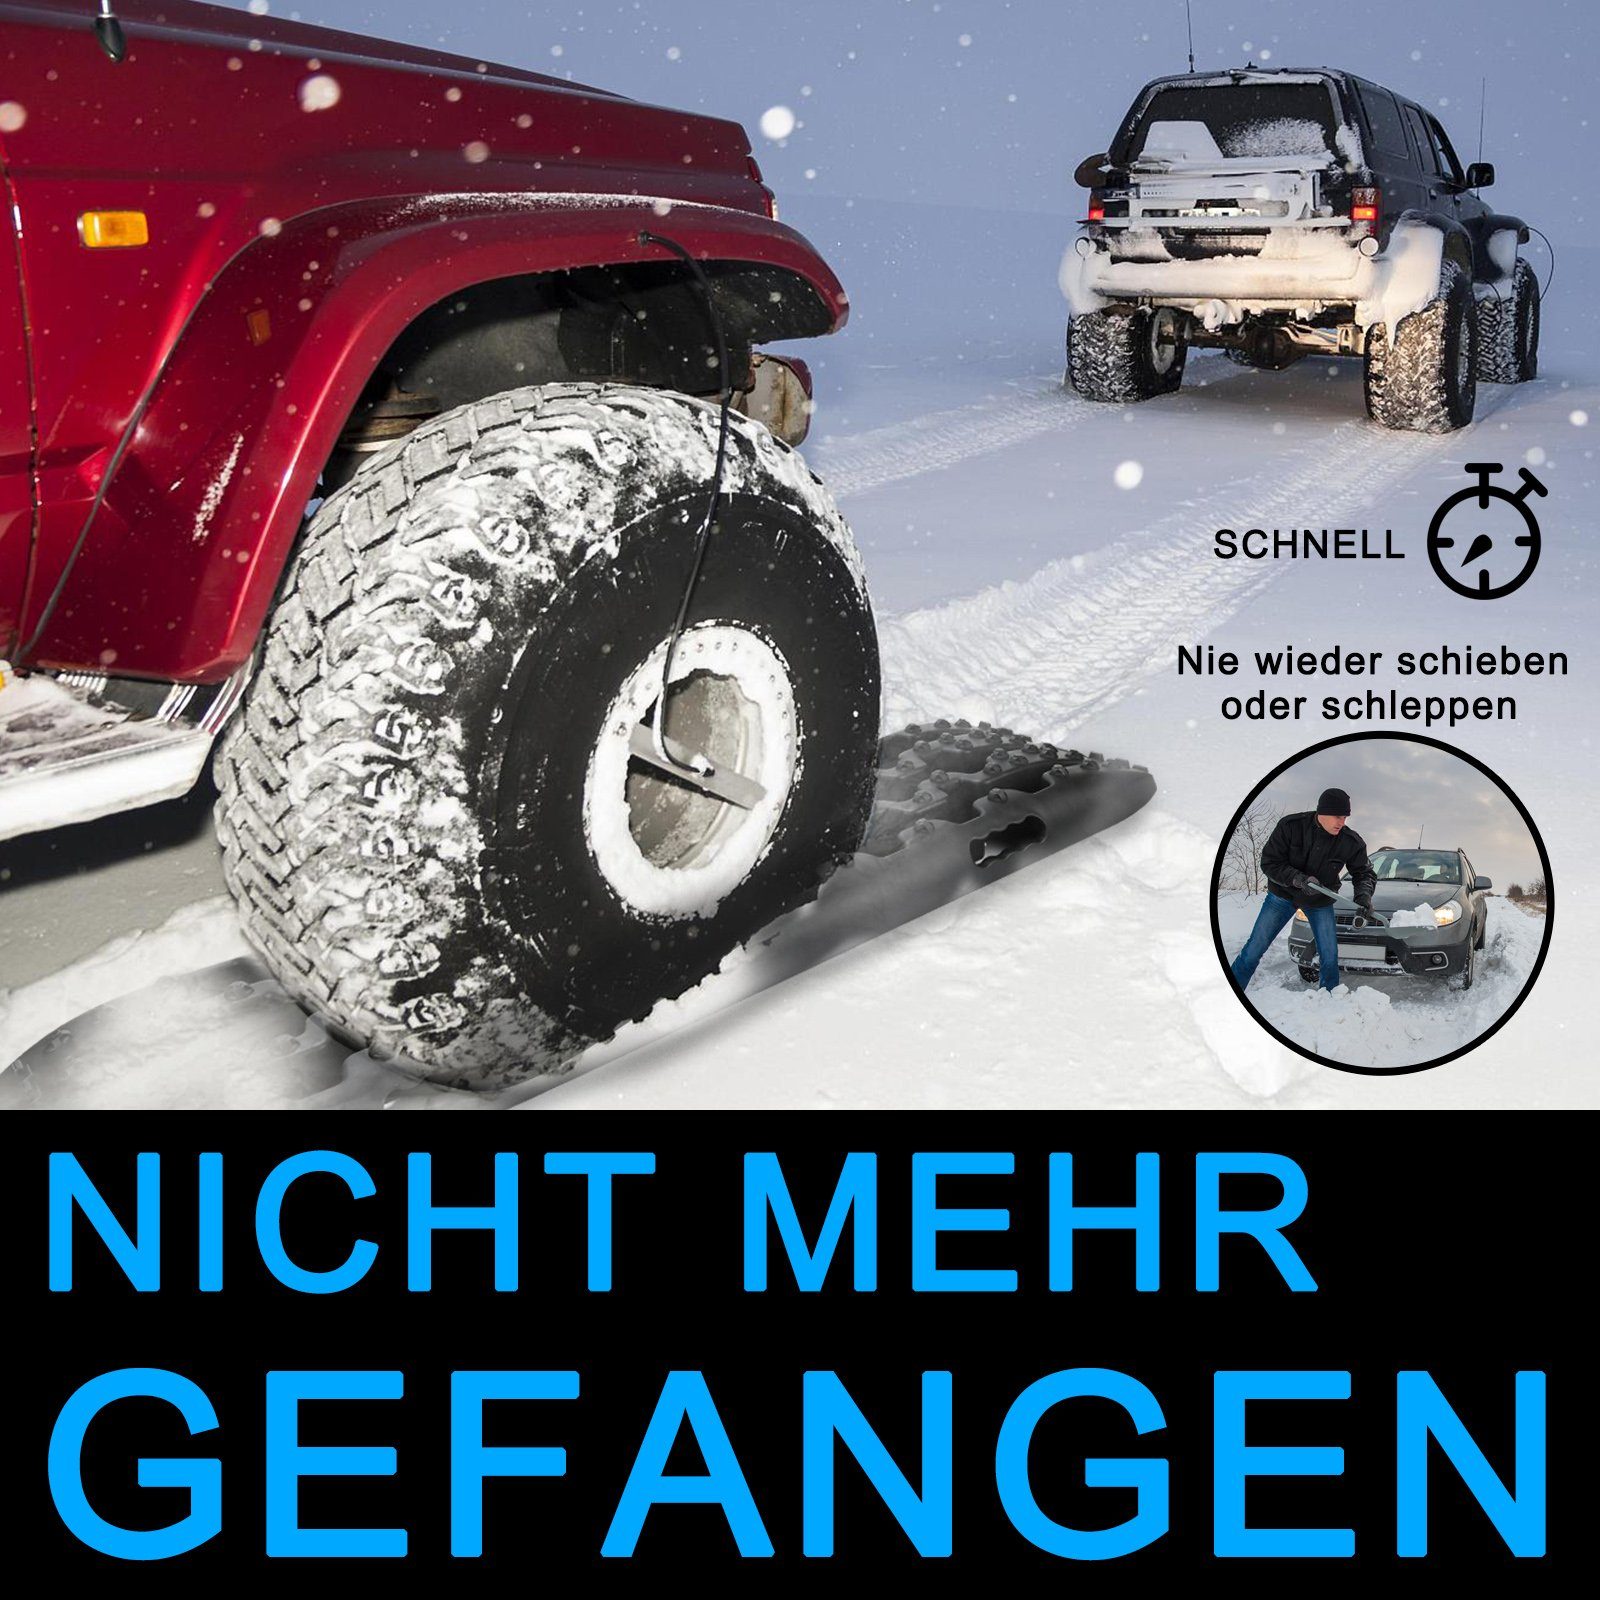 Rampen Nylon Fahrzeug Road Schnee Clanmacy Anfahrhilfe Sand Werkzeugset